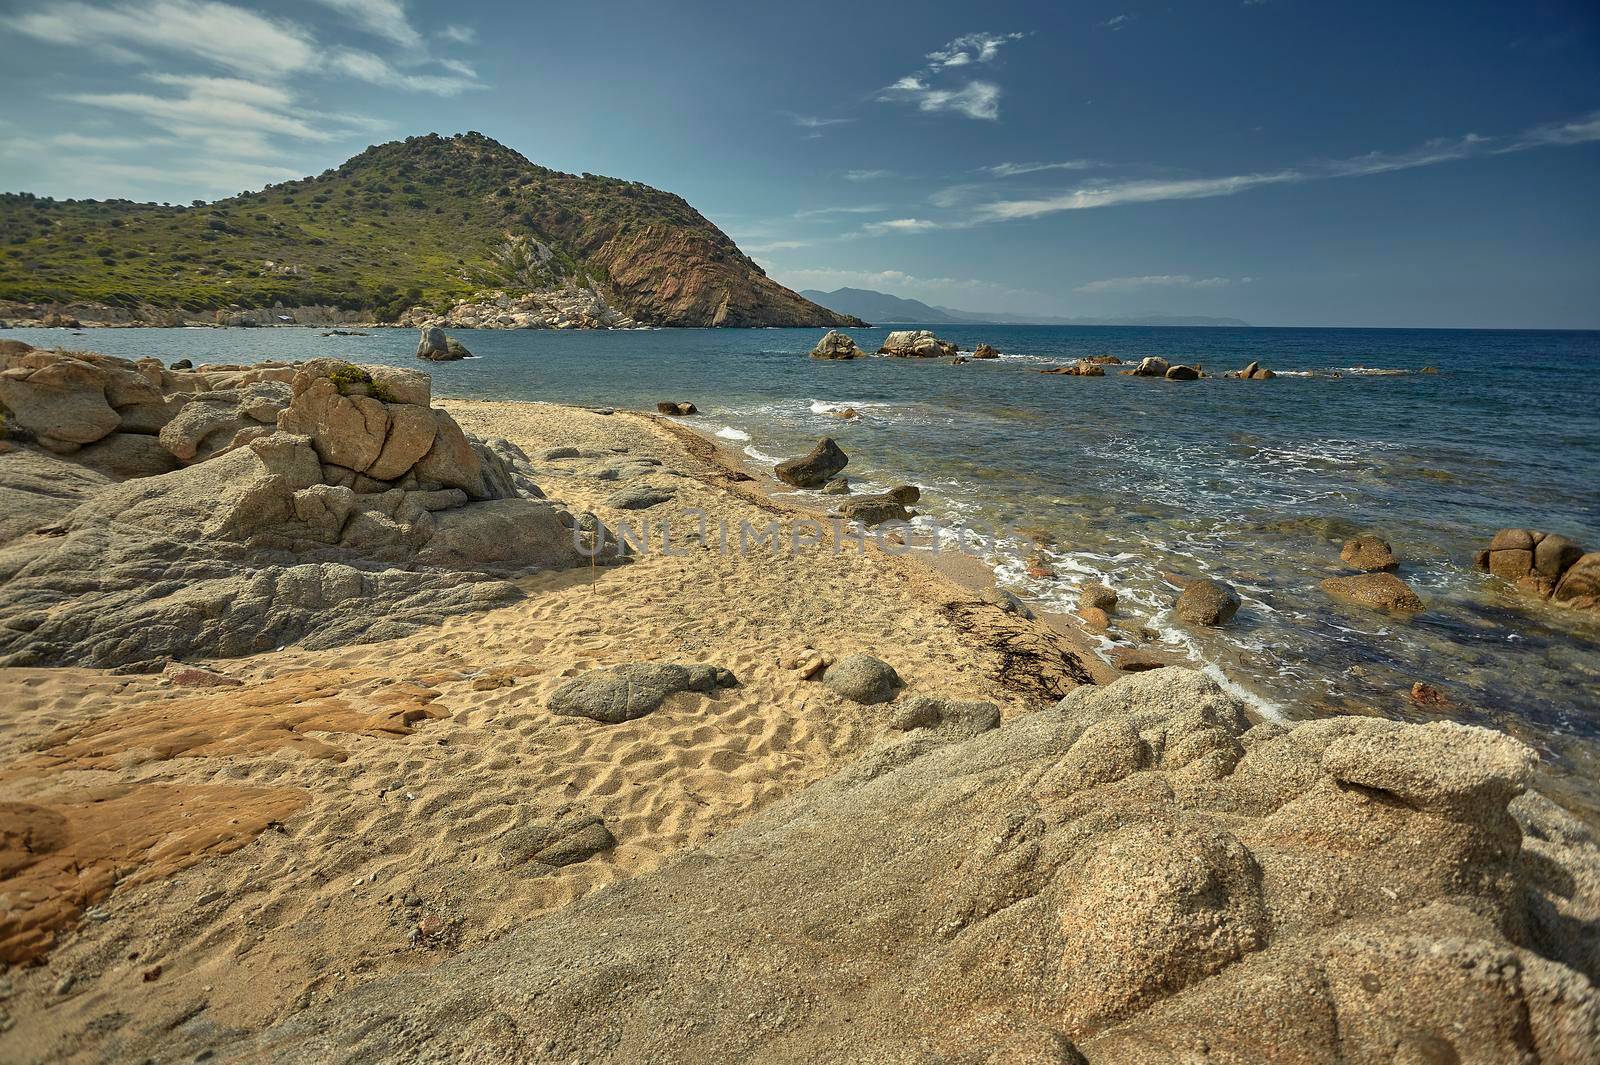 A dream beach in the center of the Mediterranean sea. by pippocarlot